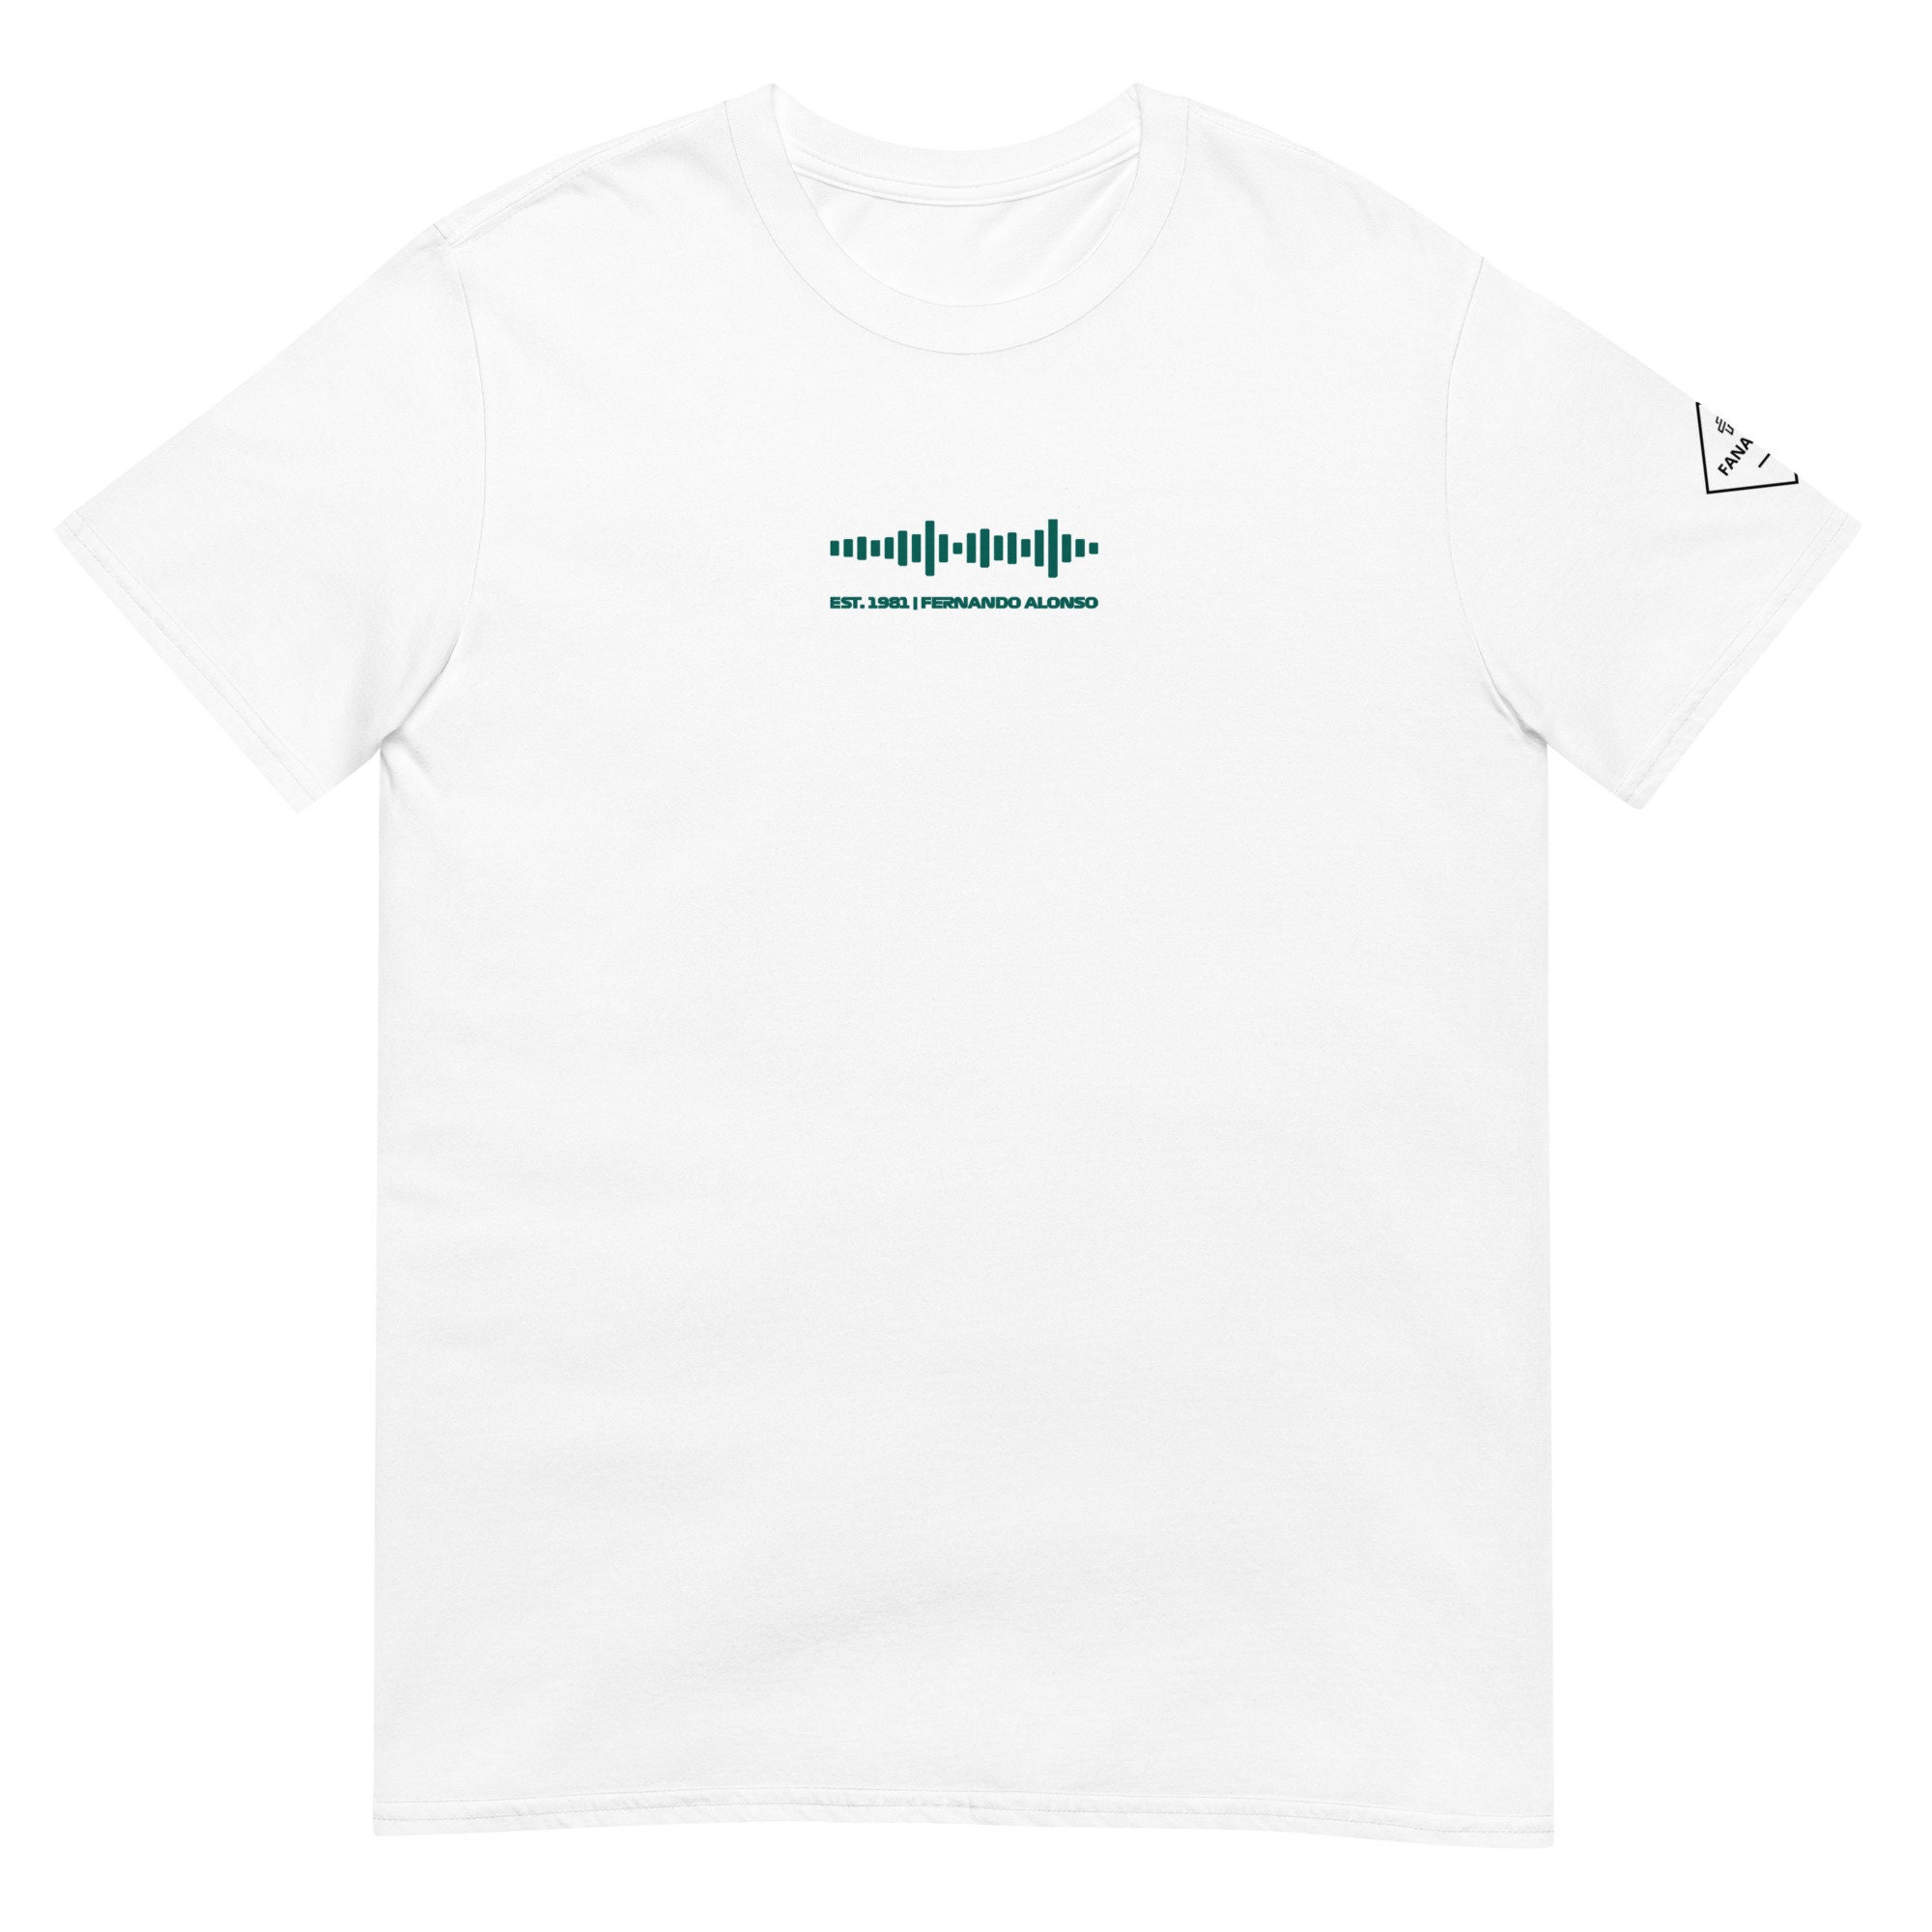 Camiseta FERNANDO IS FASTER THAN YOU 2.0 de Fernando Alonso Formula –  Club 1863